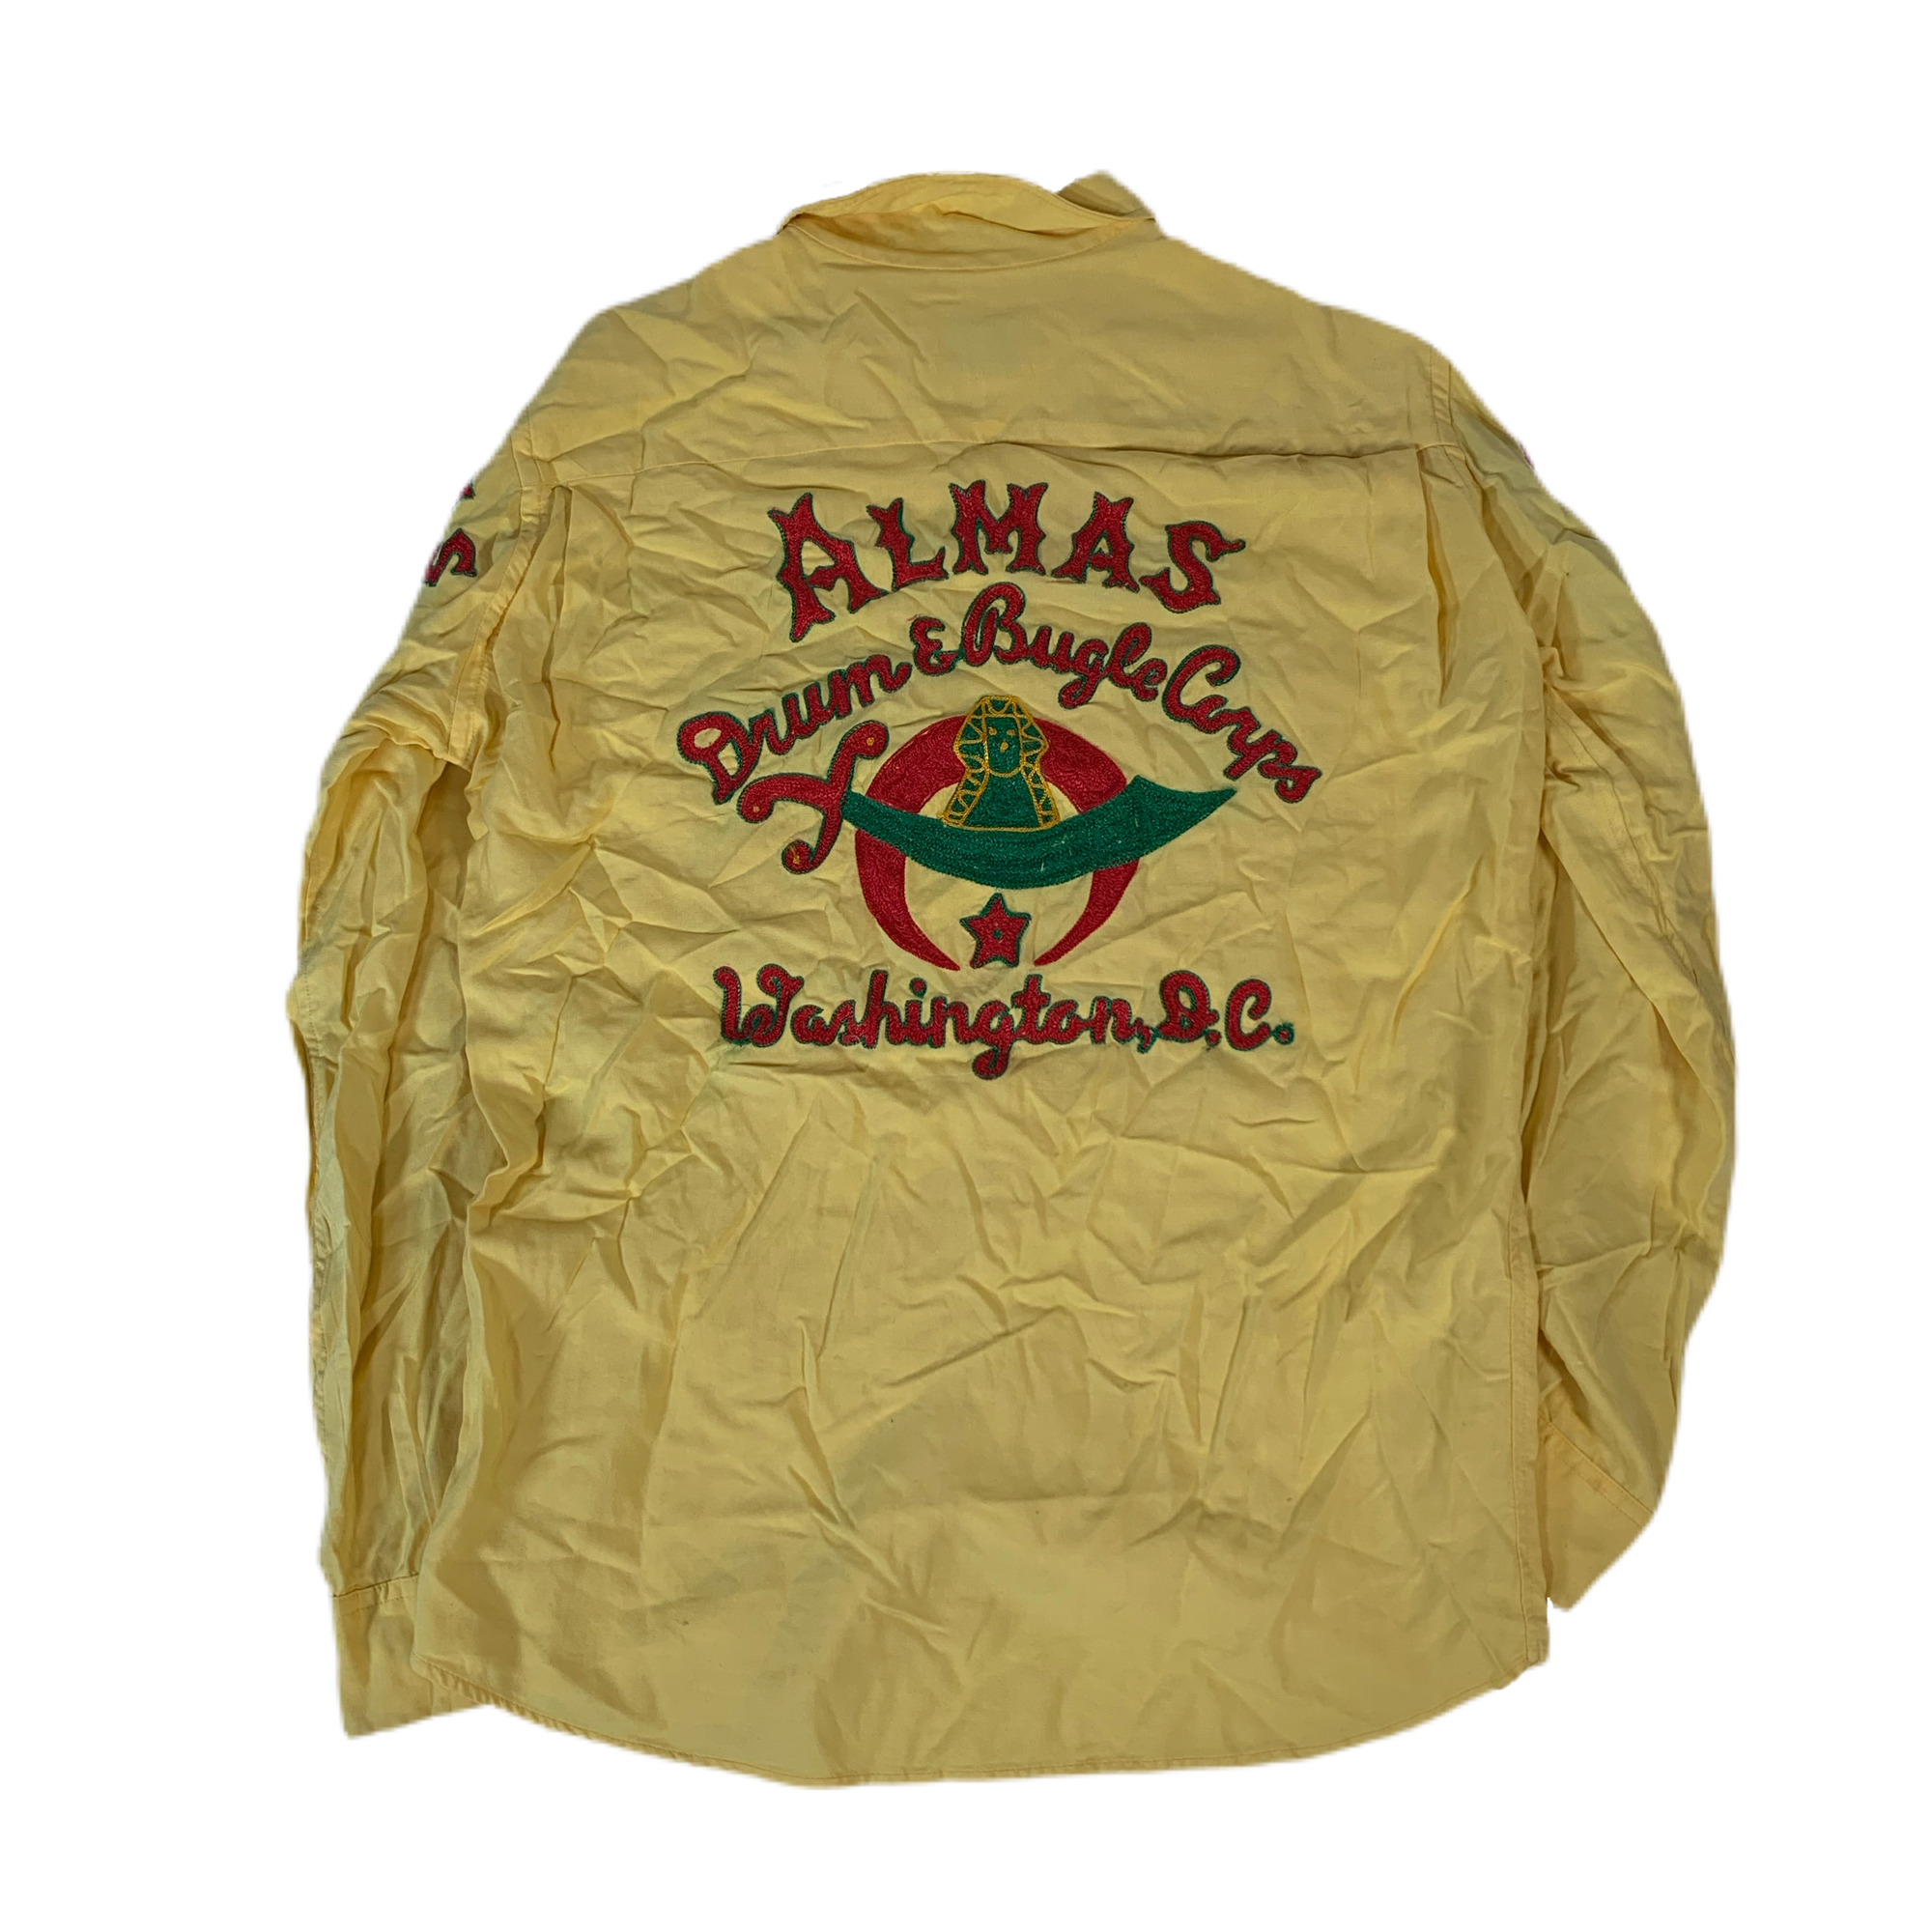 Vintage Drum & Bugle Corps "Washington, DC." Chain Stitch Rayon Button Up Shirt - jointcustodydc